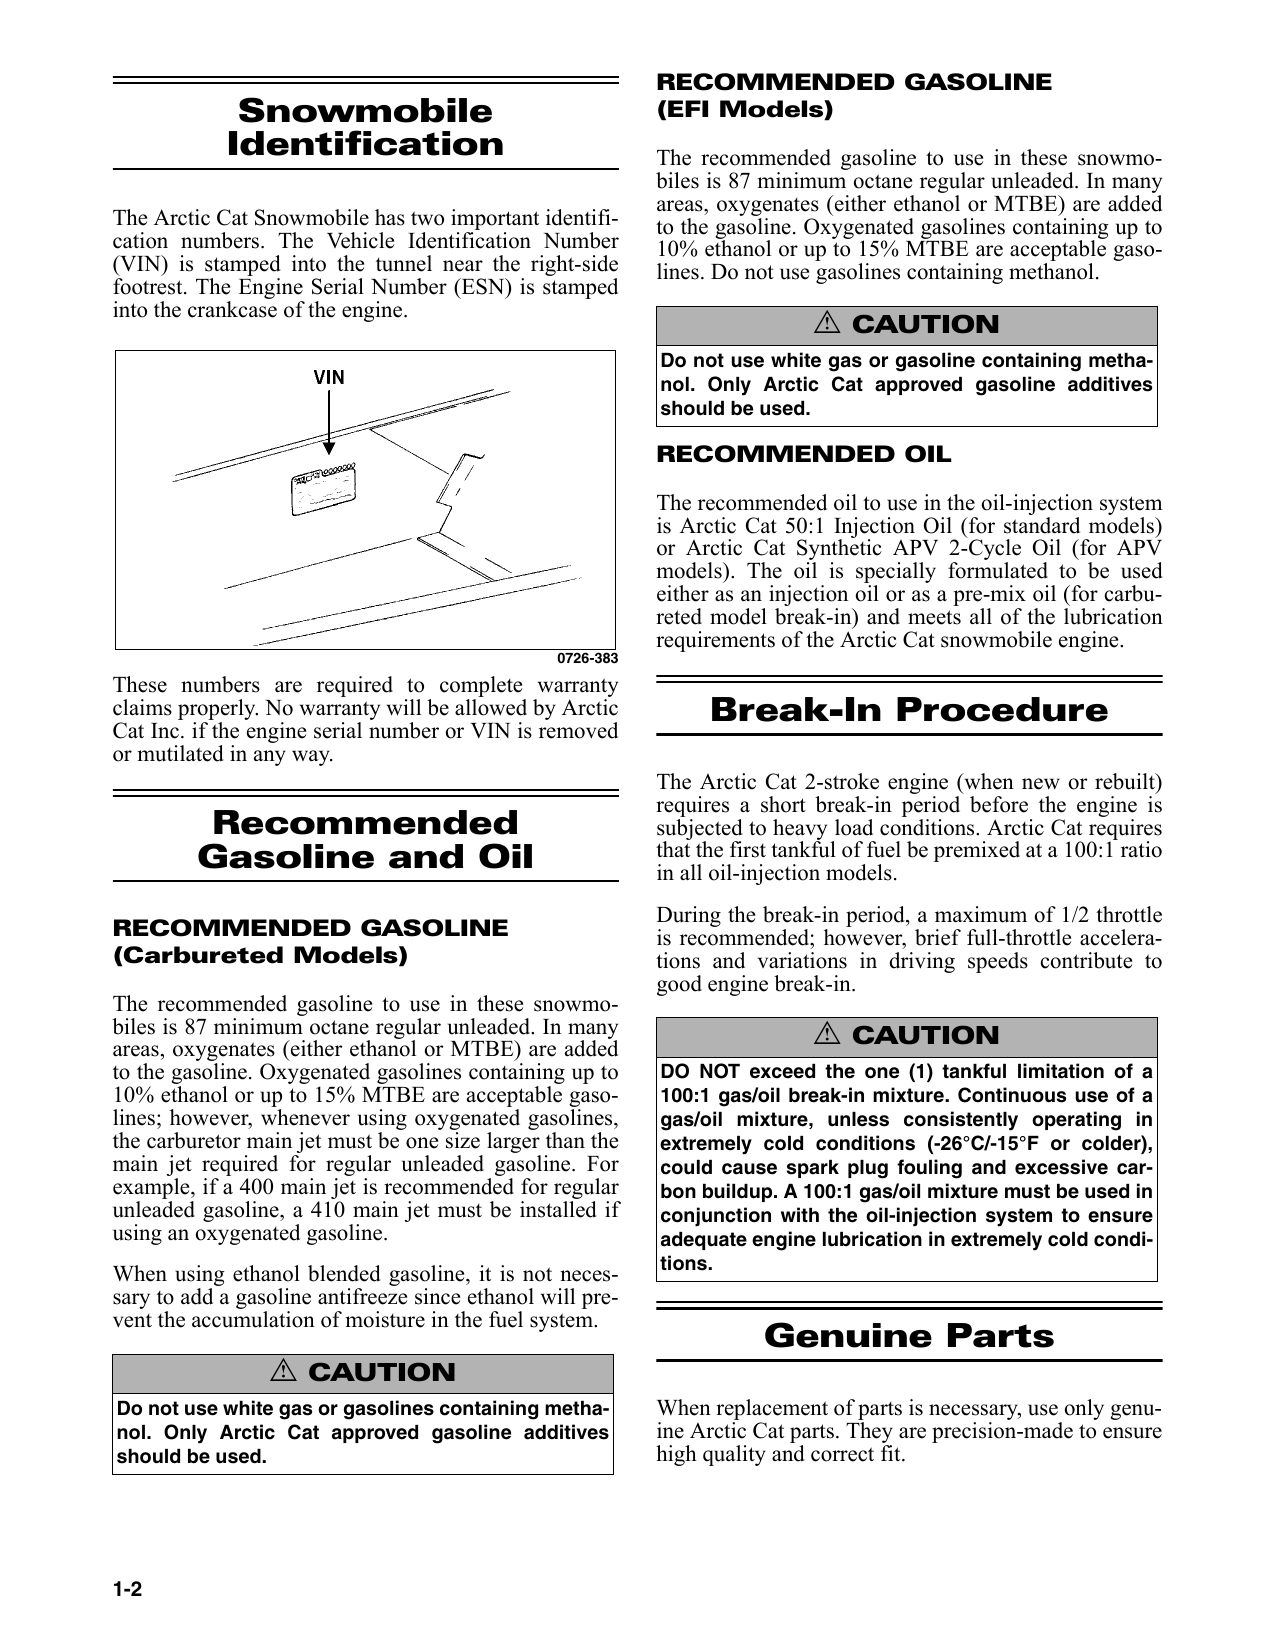 2007 Arctic Cat Snowmobile manual Preview image 2